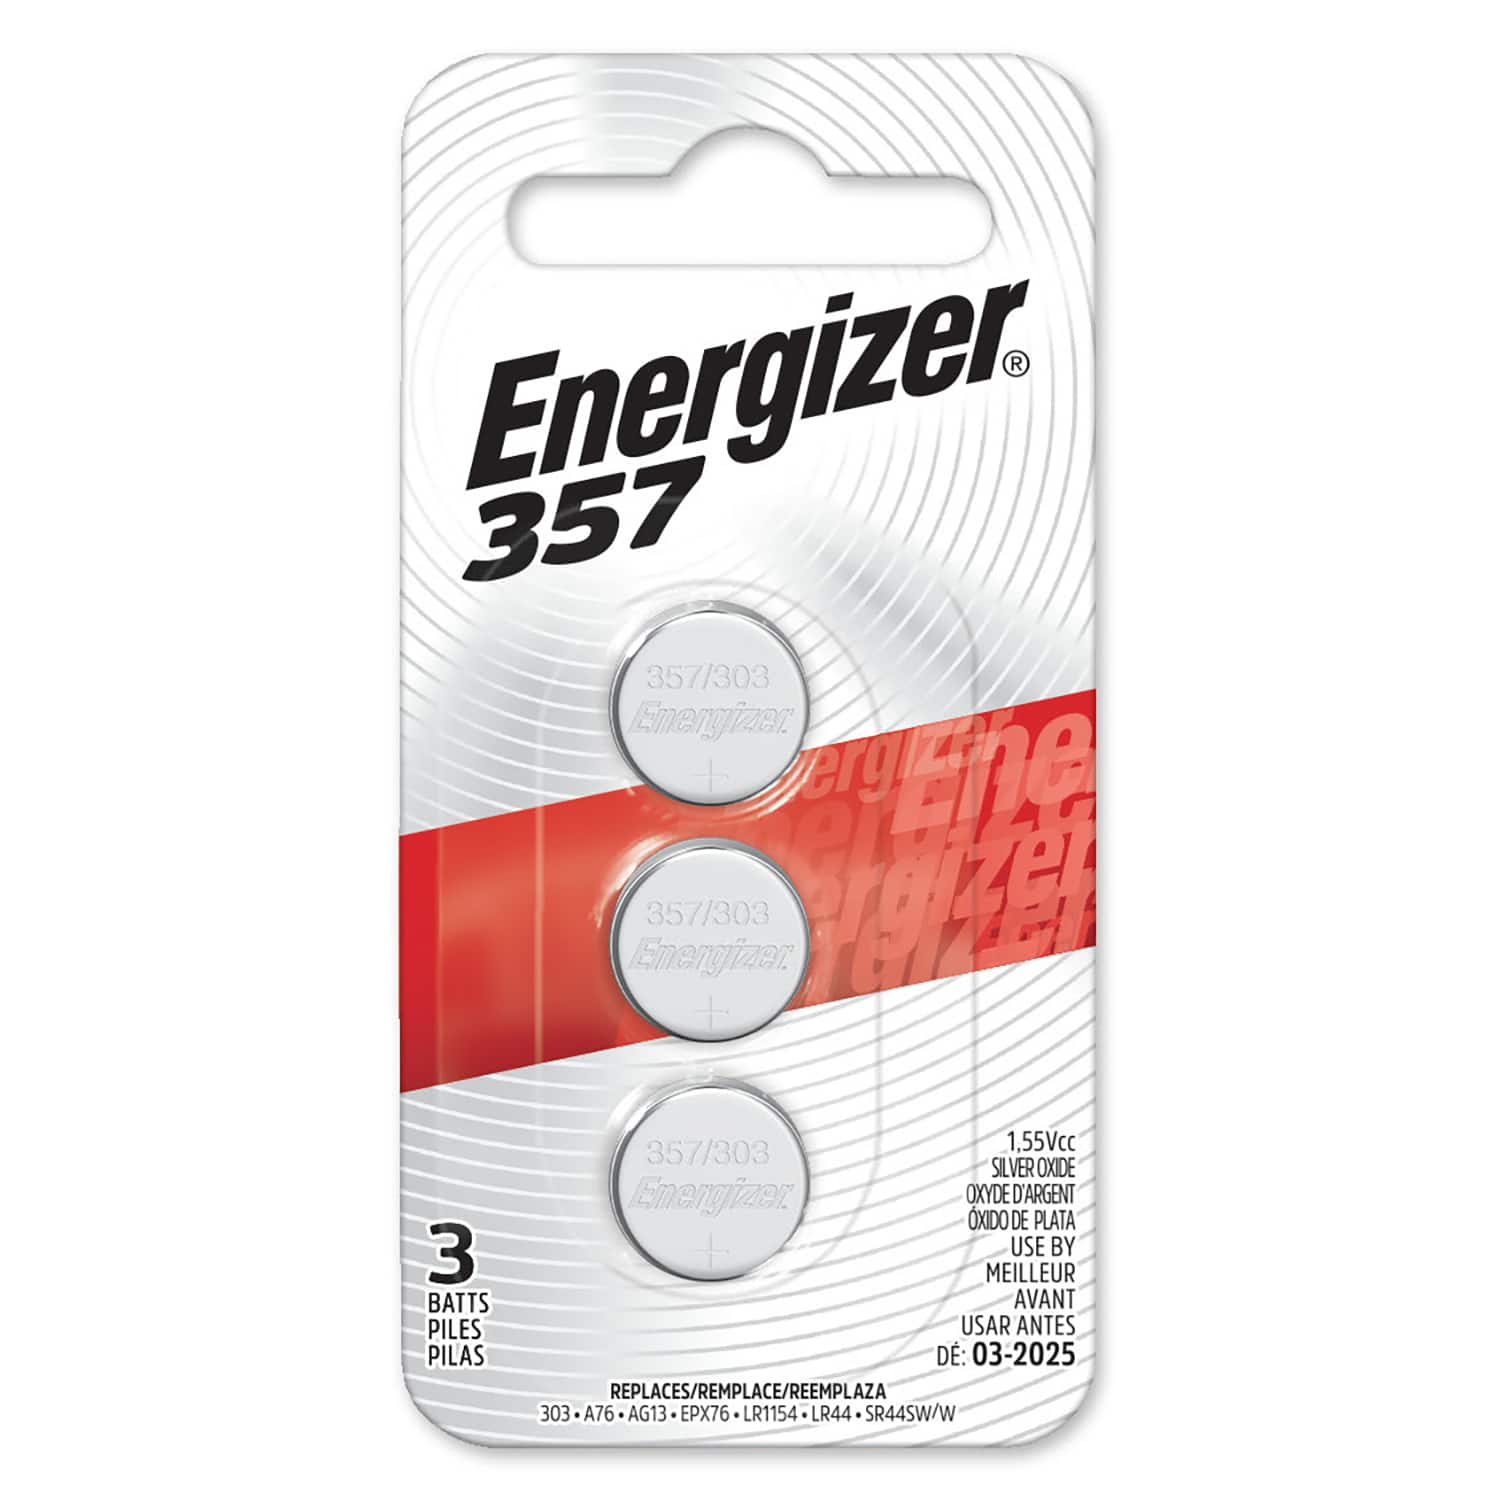 Onregelmatigheden Communisme De eigenaar Energizer® 357 1.55V Silver Oxide Batteries, 3ct. | Michaels